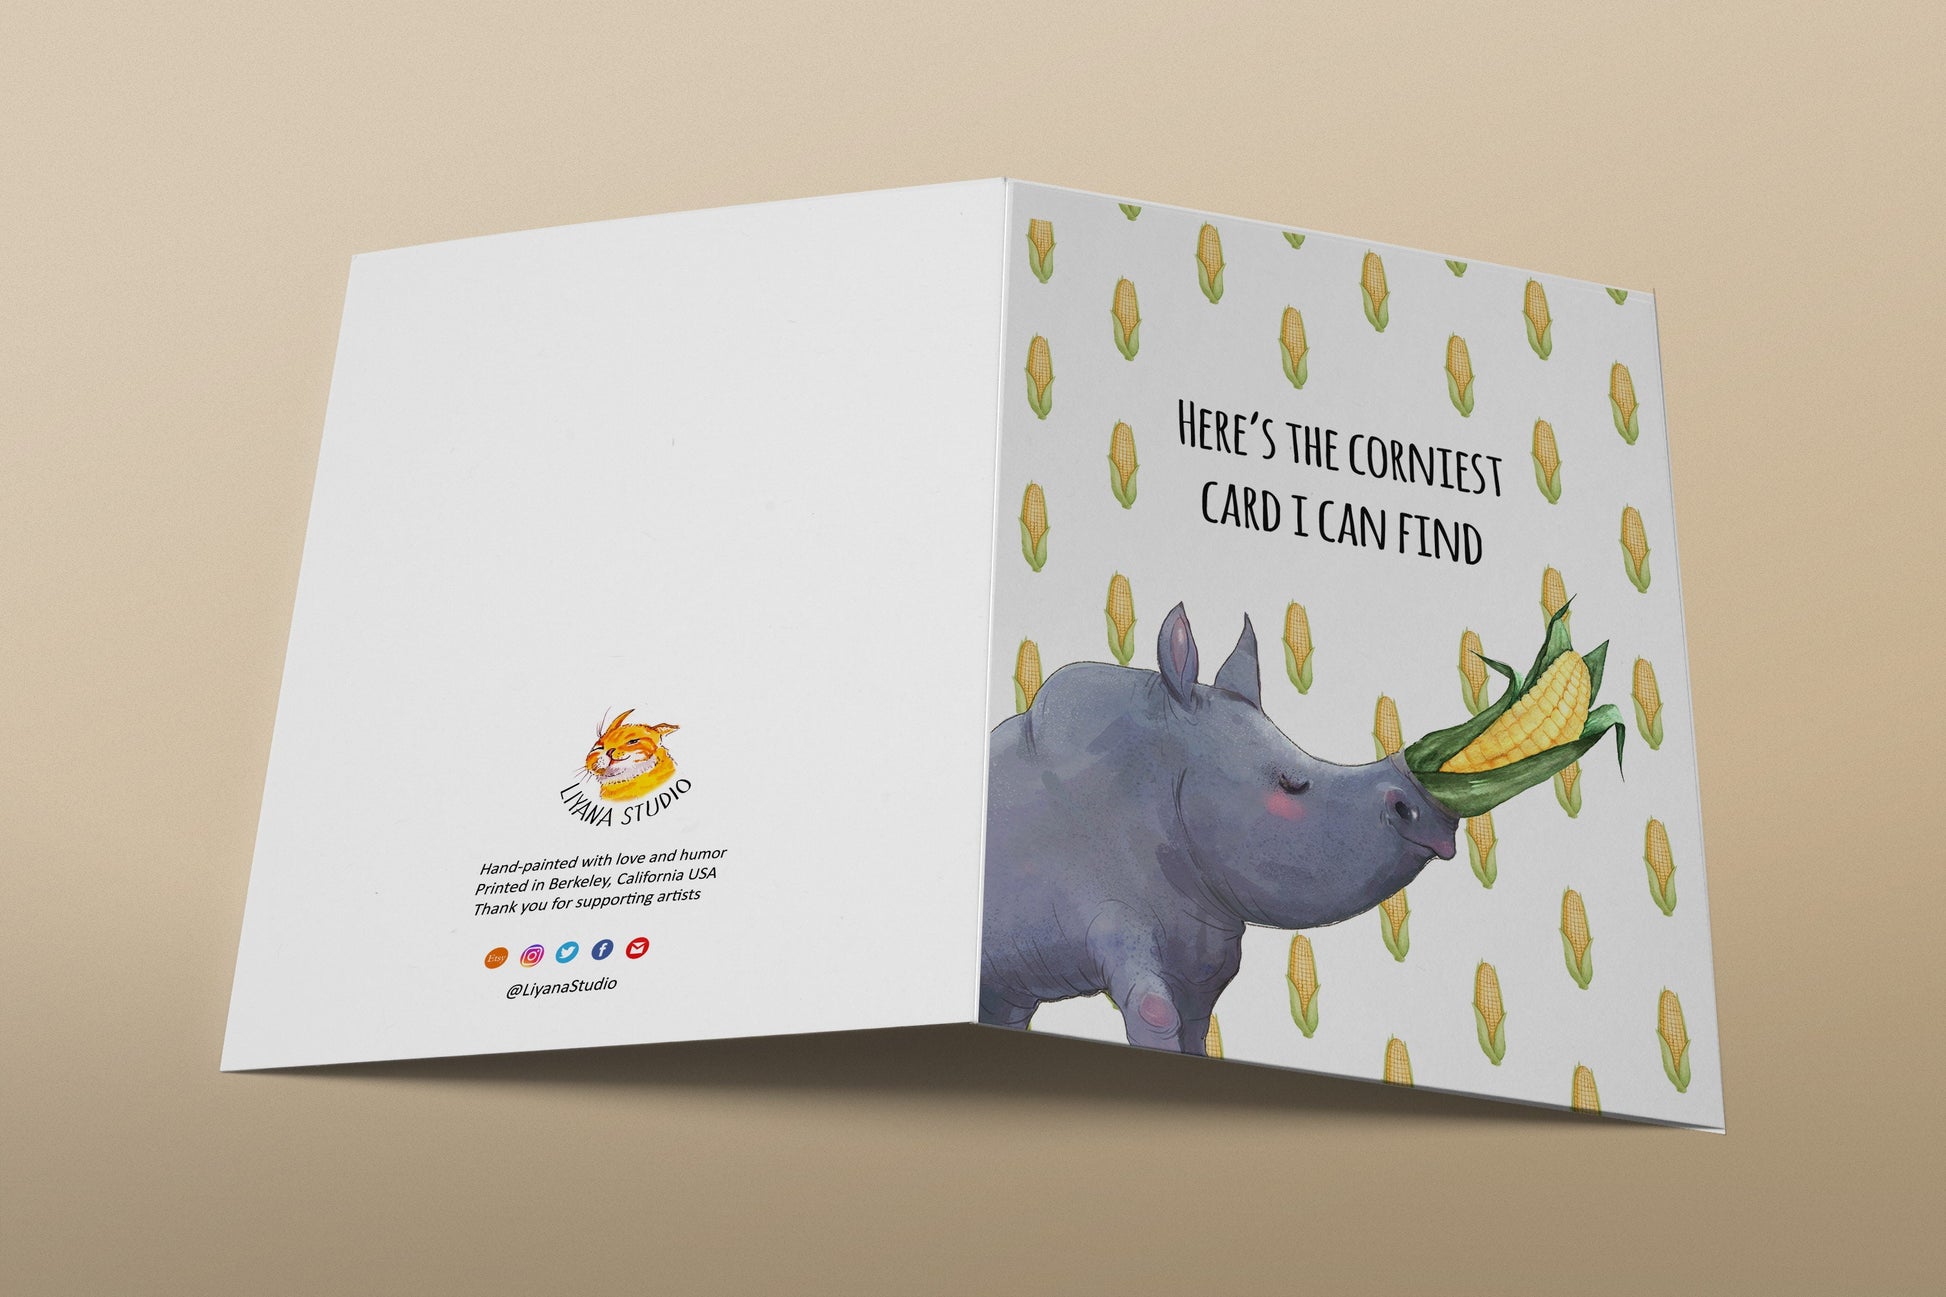 Funny Valentines Card For Boyfriend - Rhino Corny Anniversary Cards For Husband